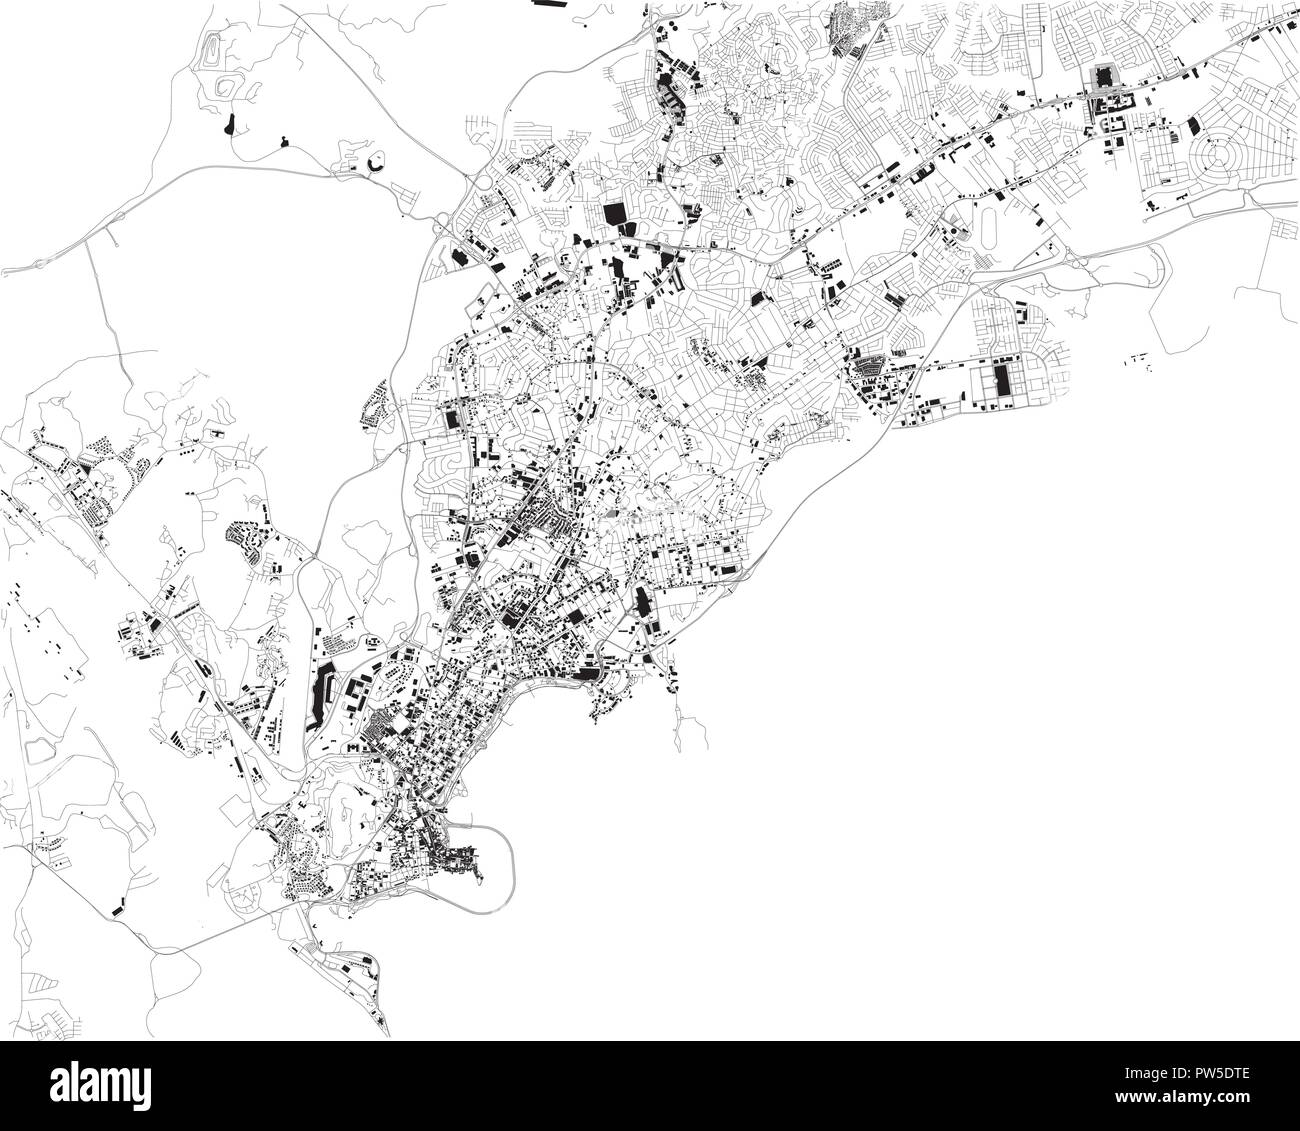 Satelliten Karte von Panama City, Panama, Straßen der Stadt. Stadtplan, City Center. Mittelamerika Stock Vektor